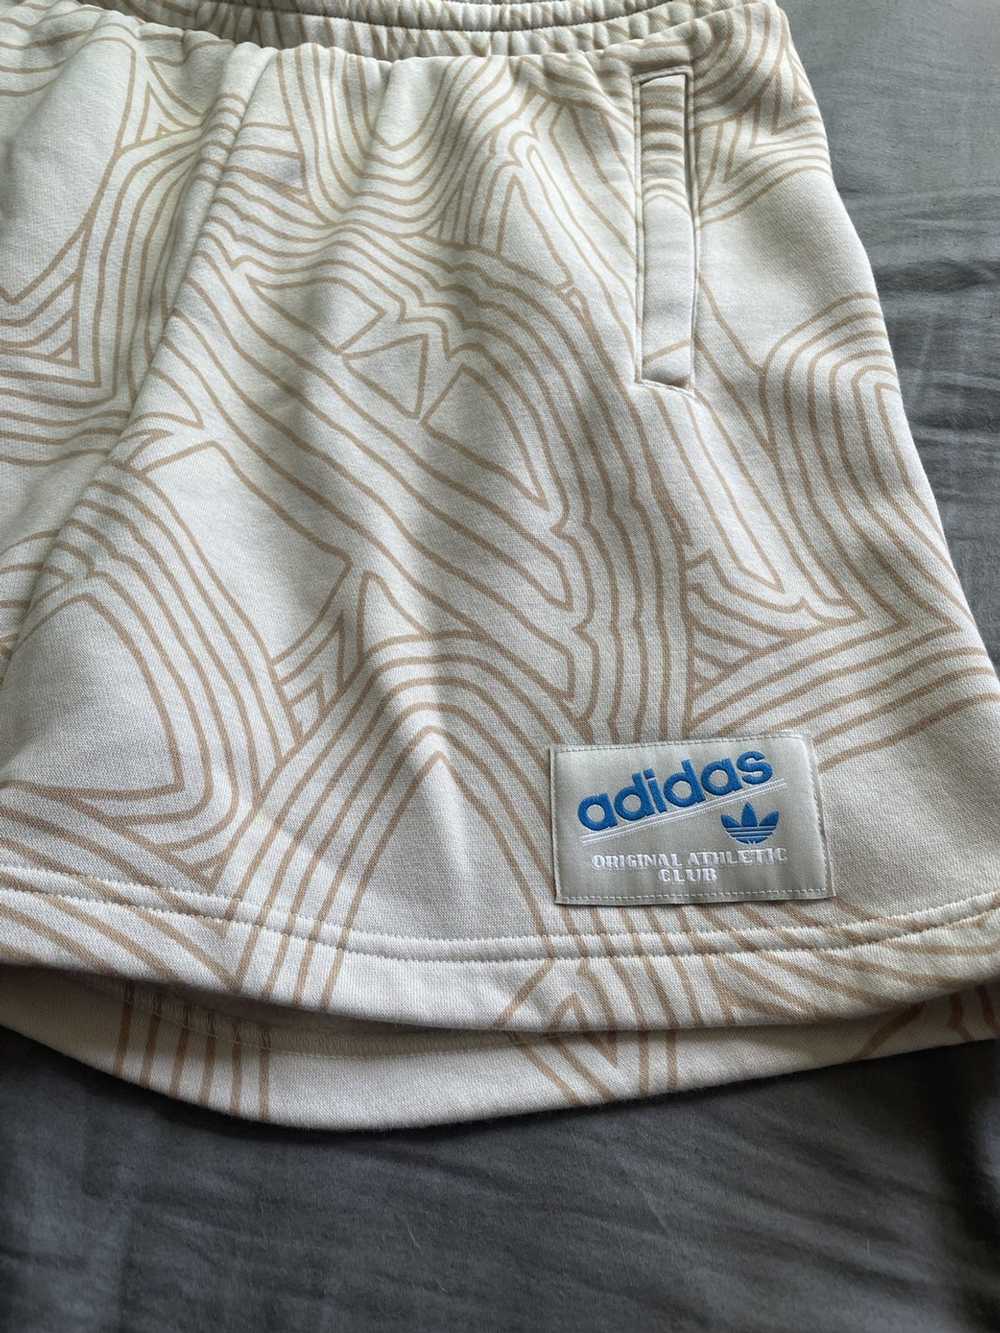 Adidas Adidas Original Athletic Club Shorts - image 2